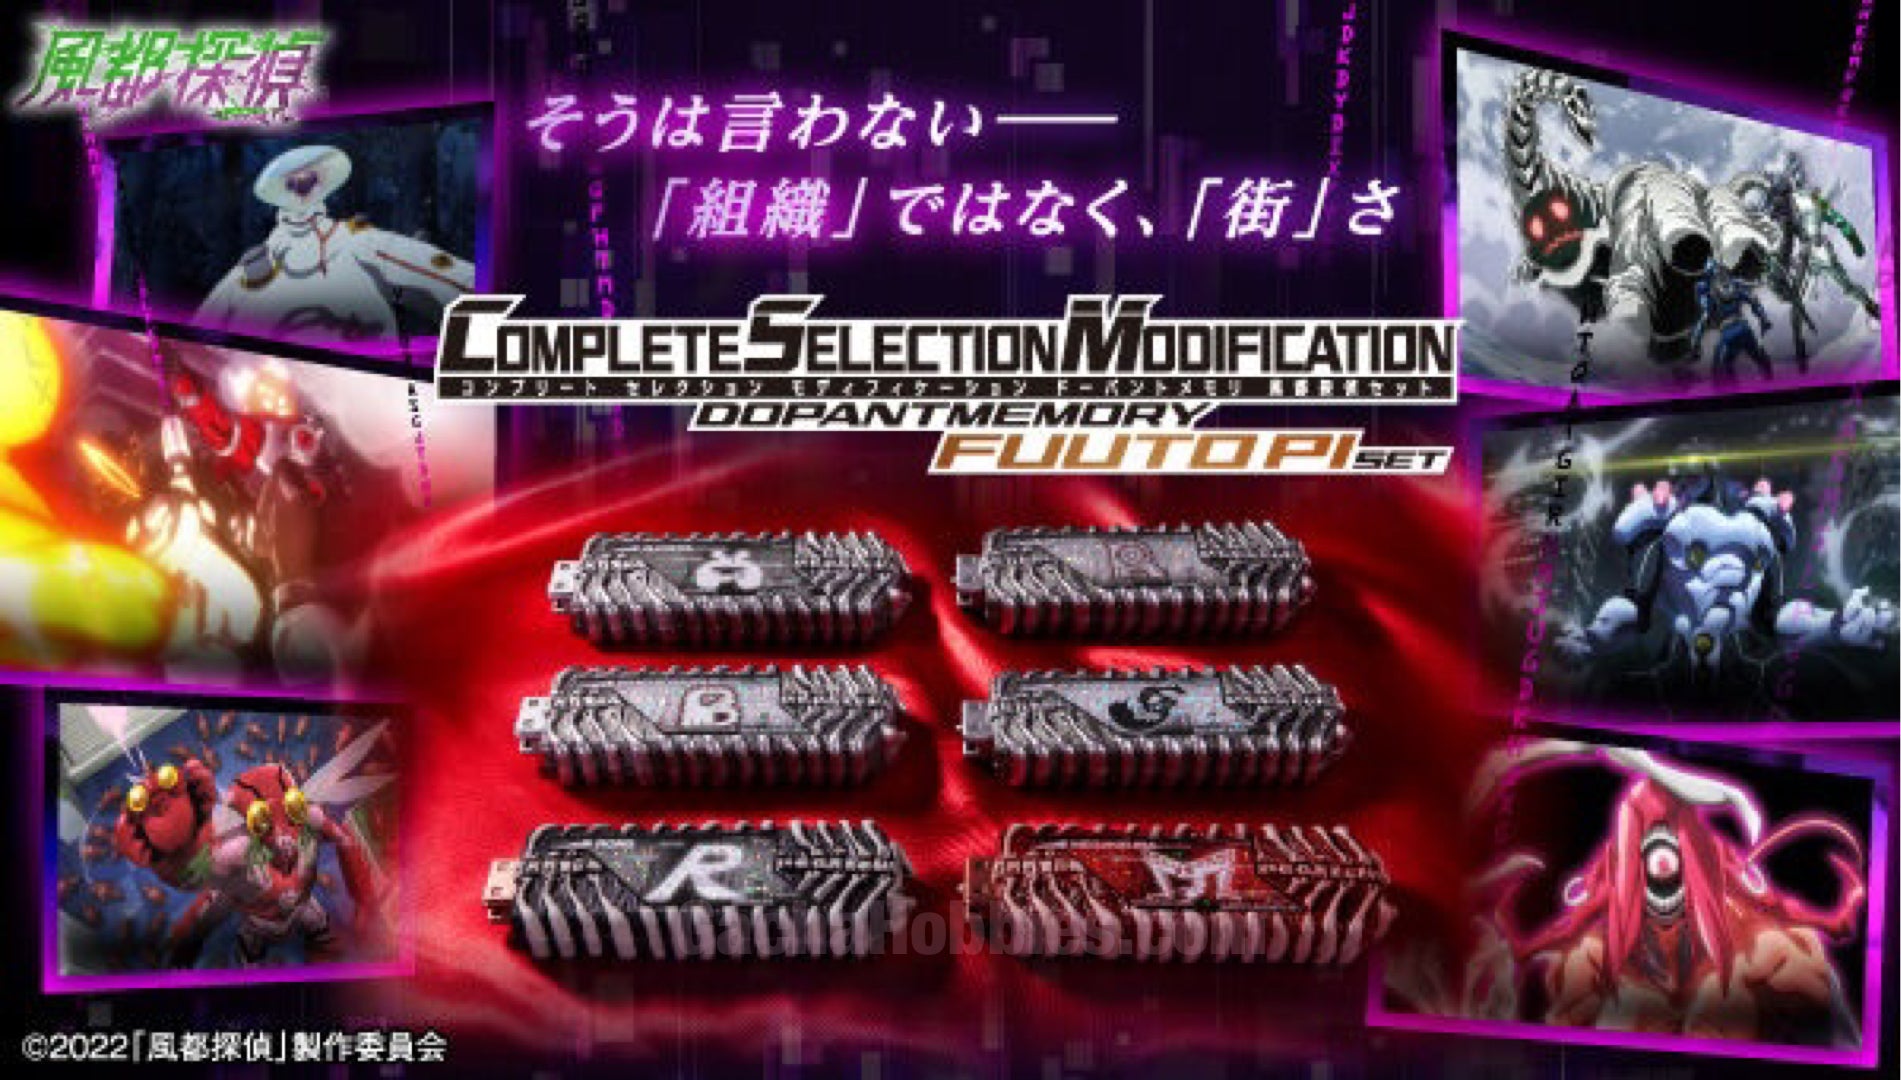 Complete Selection Modification CSM Kamen Rider W Dopant Memory 